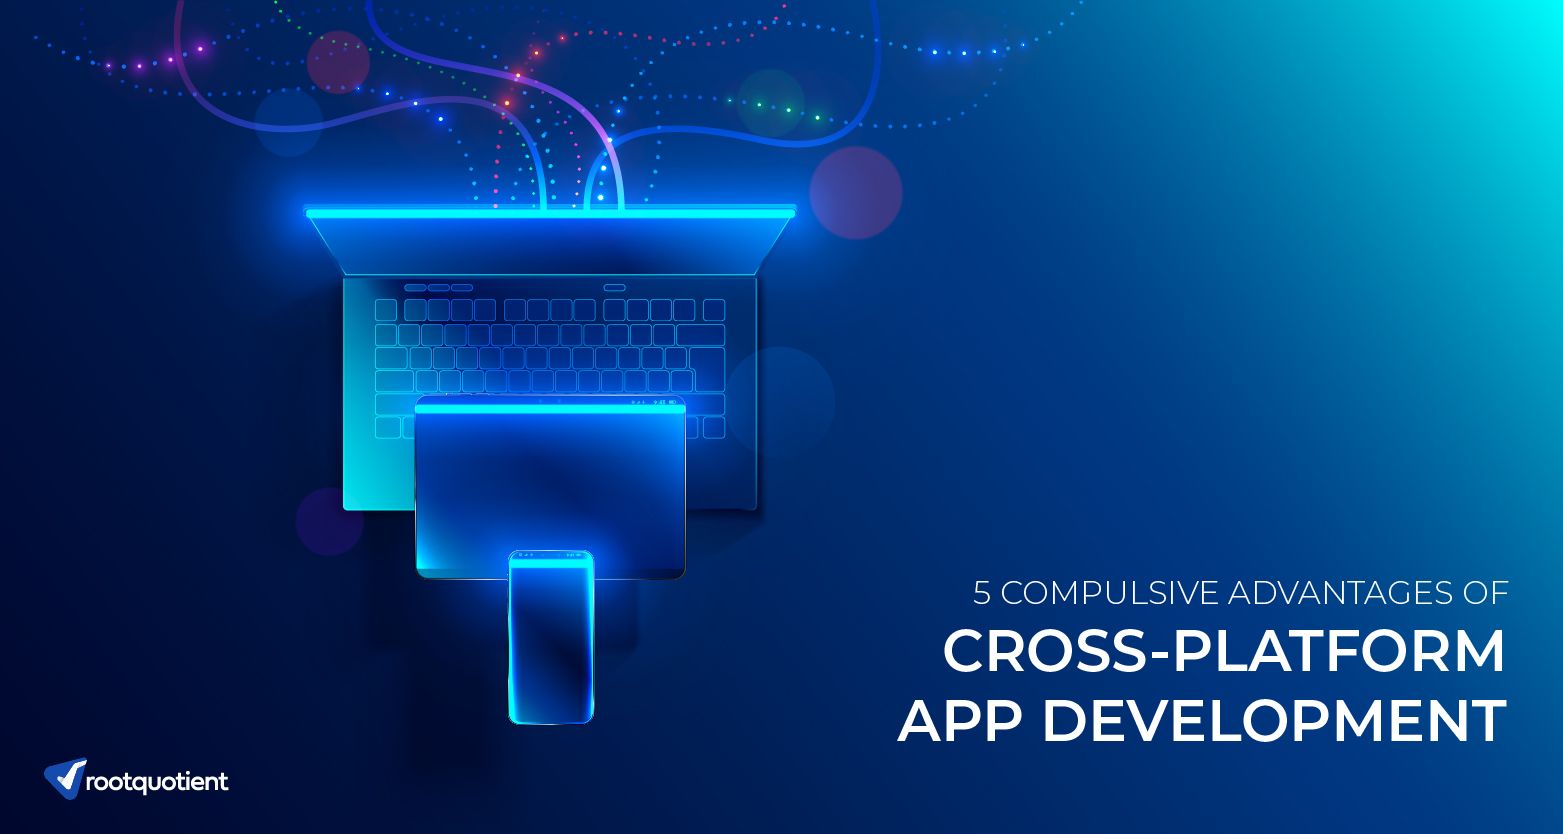 5 Advantages of Cross-Platform App Development over Native Development